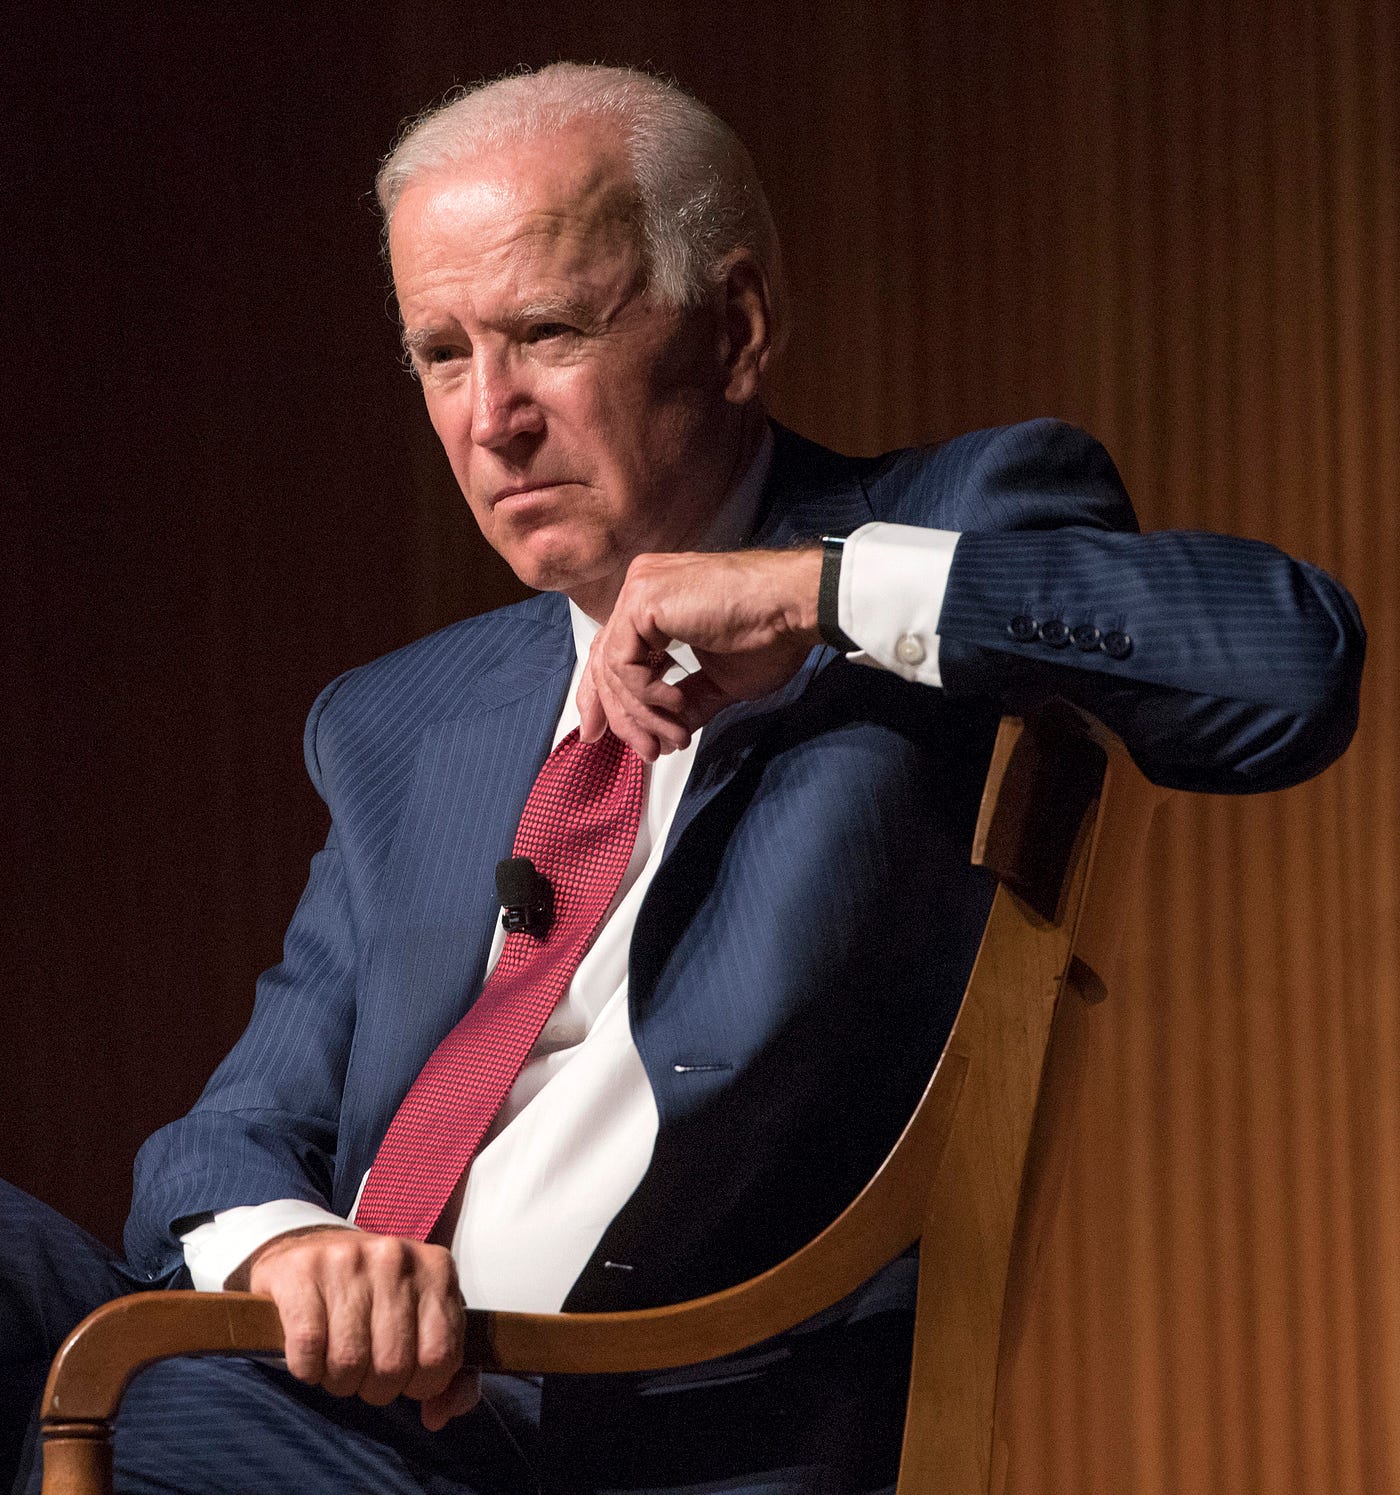 Joe Biden grabbing onto chair